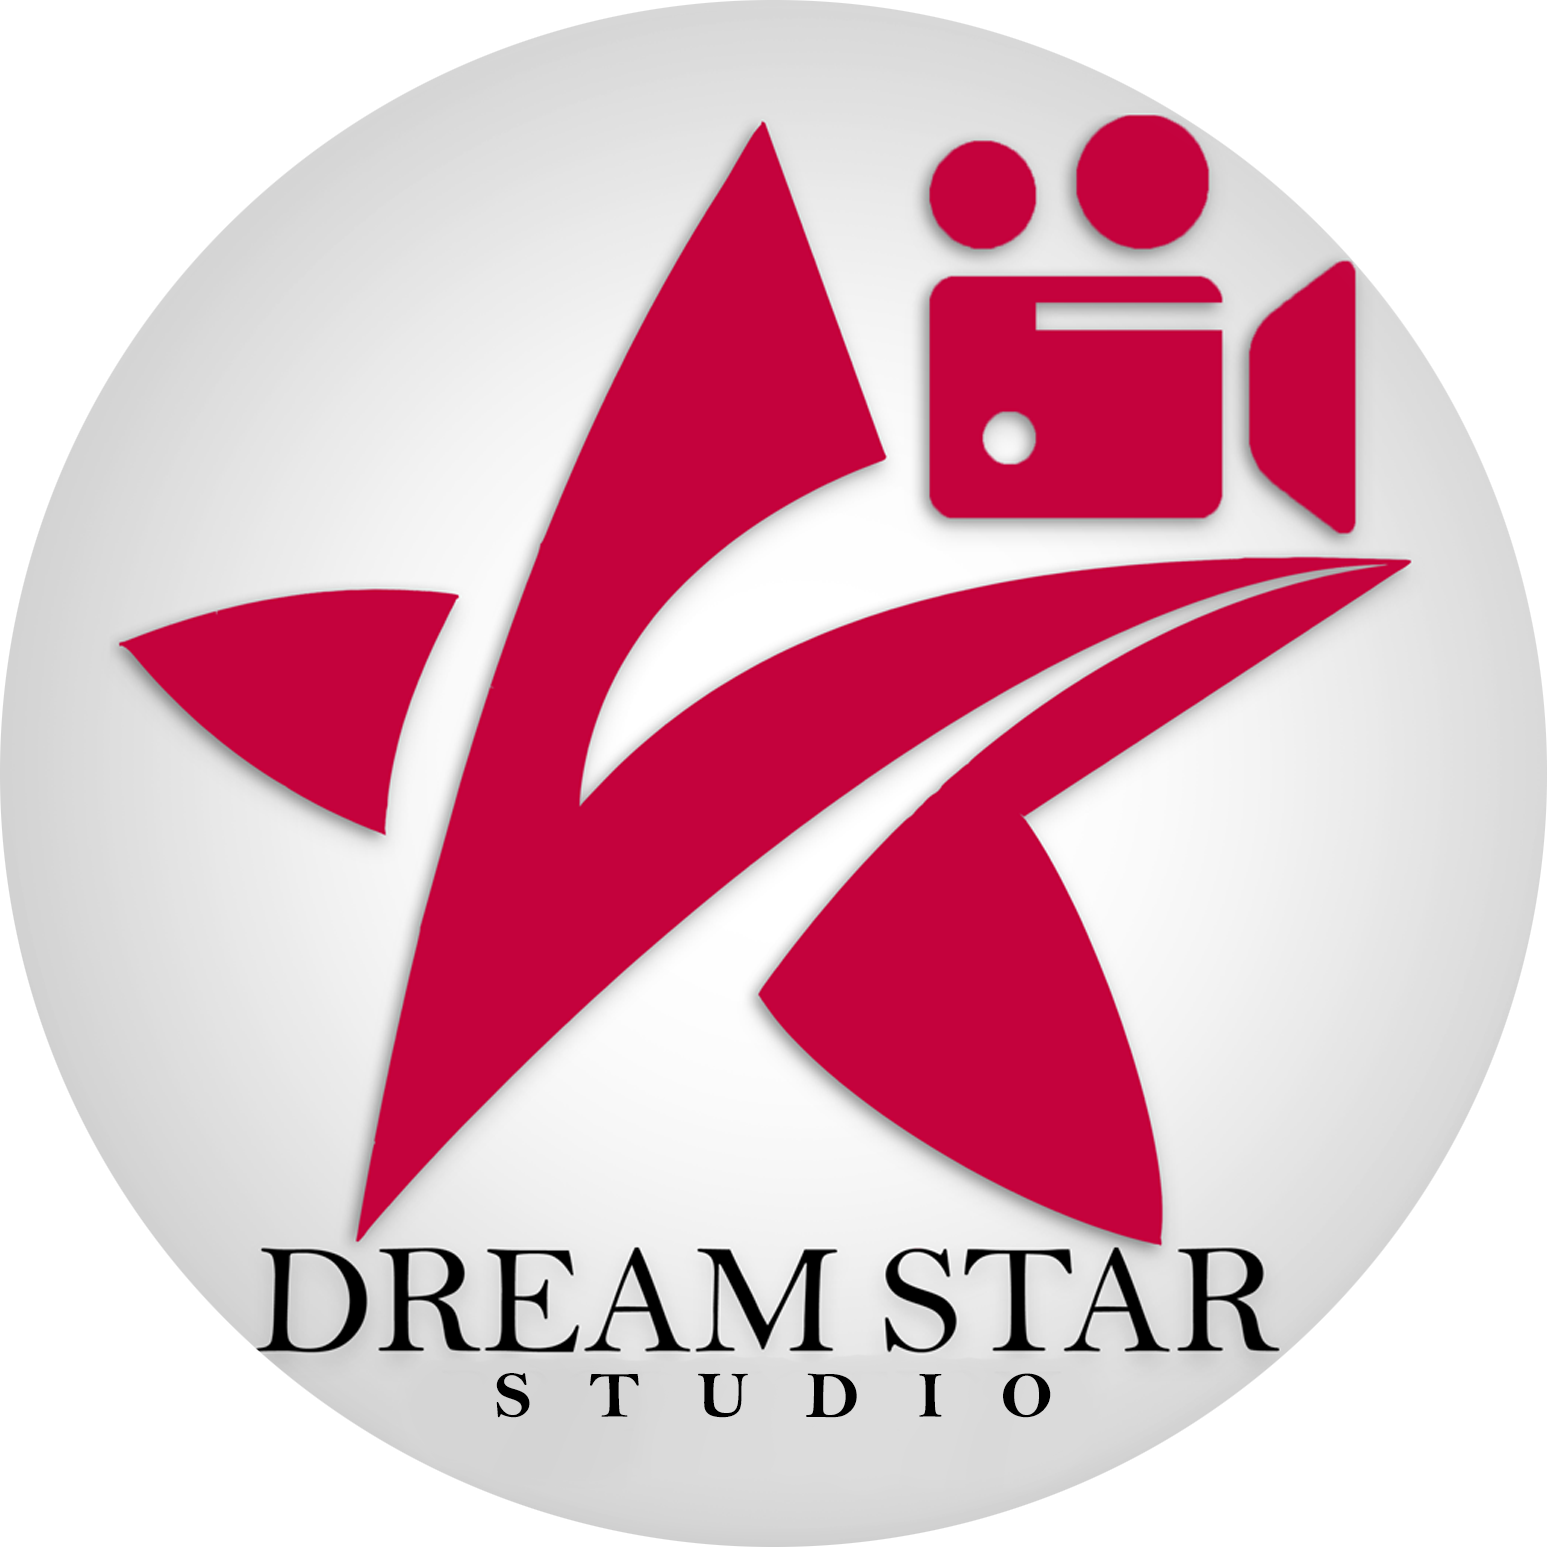 Dream Star Studio | Entertainment News in Bengali (বিনোদনের খবর), Latest Tollywood News, Bangla News